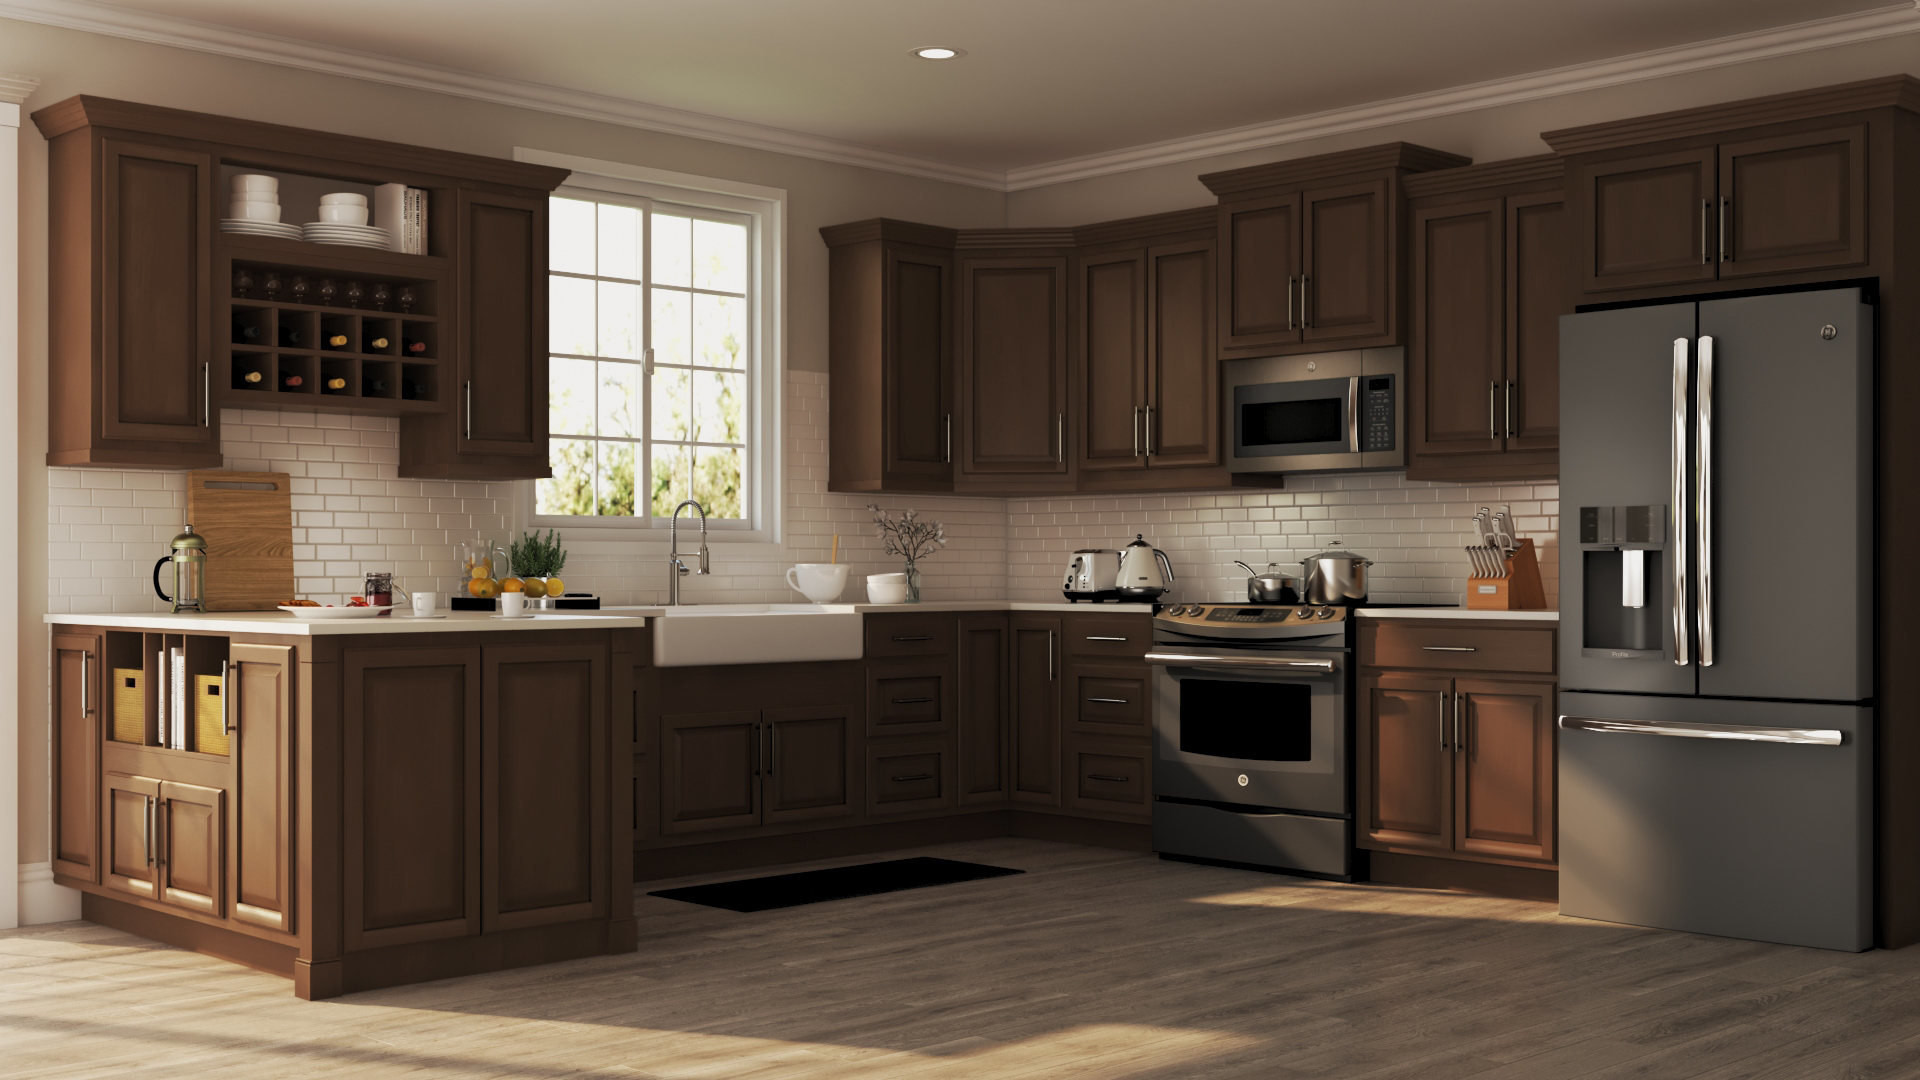 Home Depot Kitchen Remodel Estimator
 Hampton Wall Kitchen Cabinets in Cognac – Kitchen – The